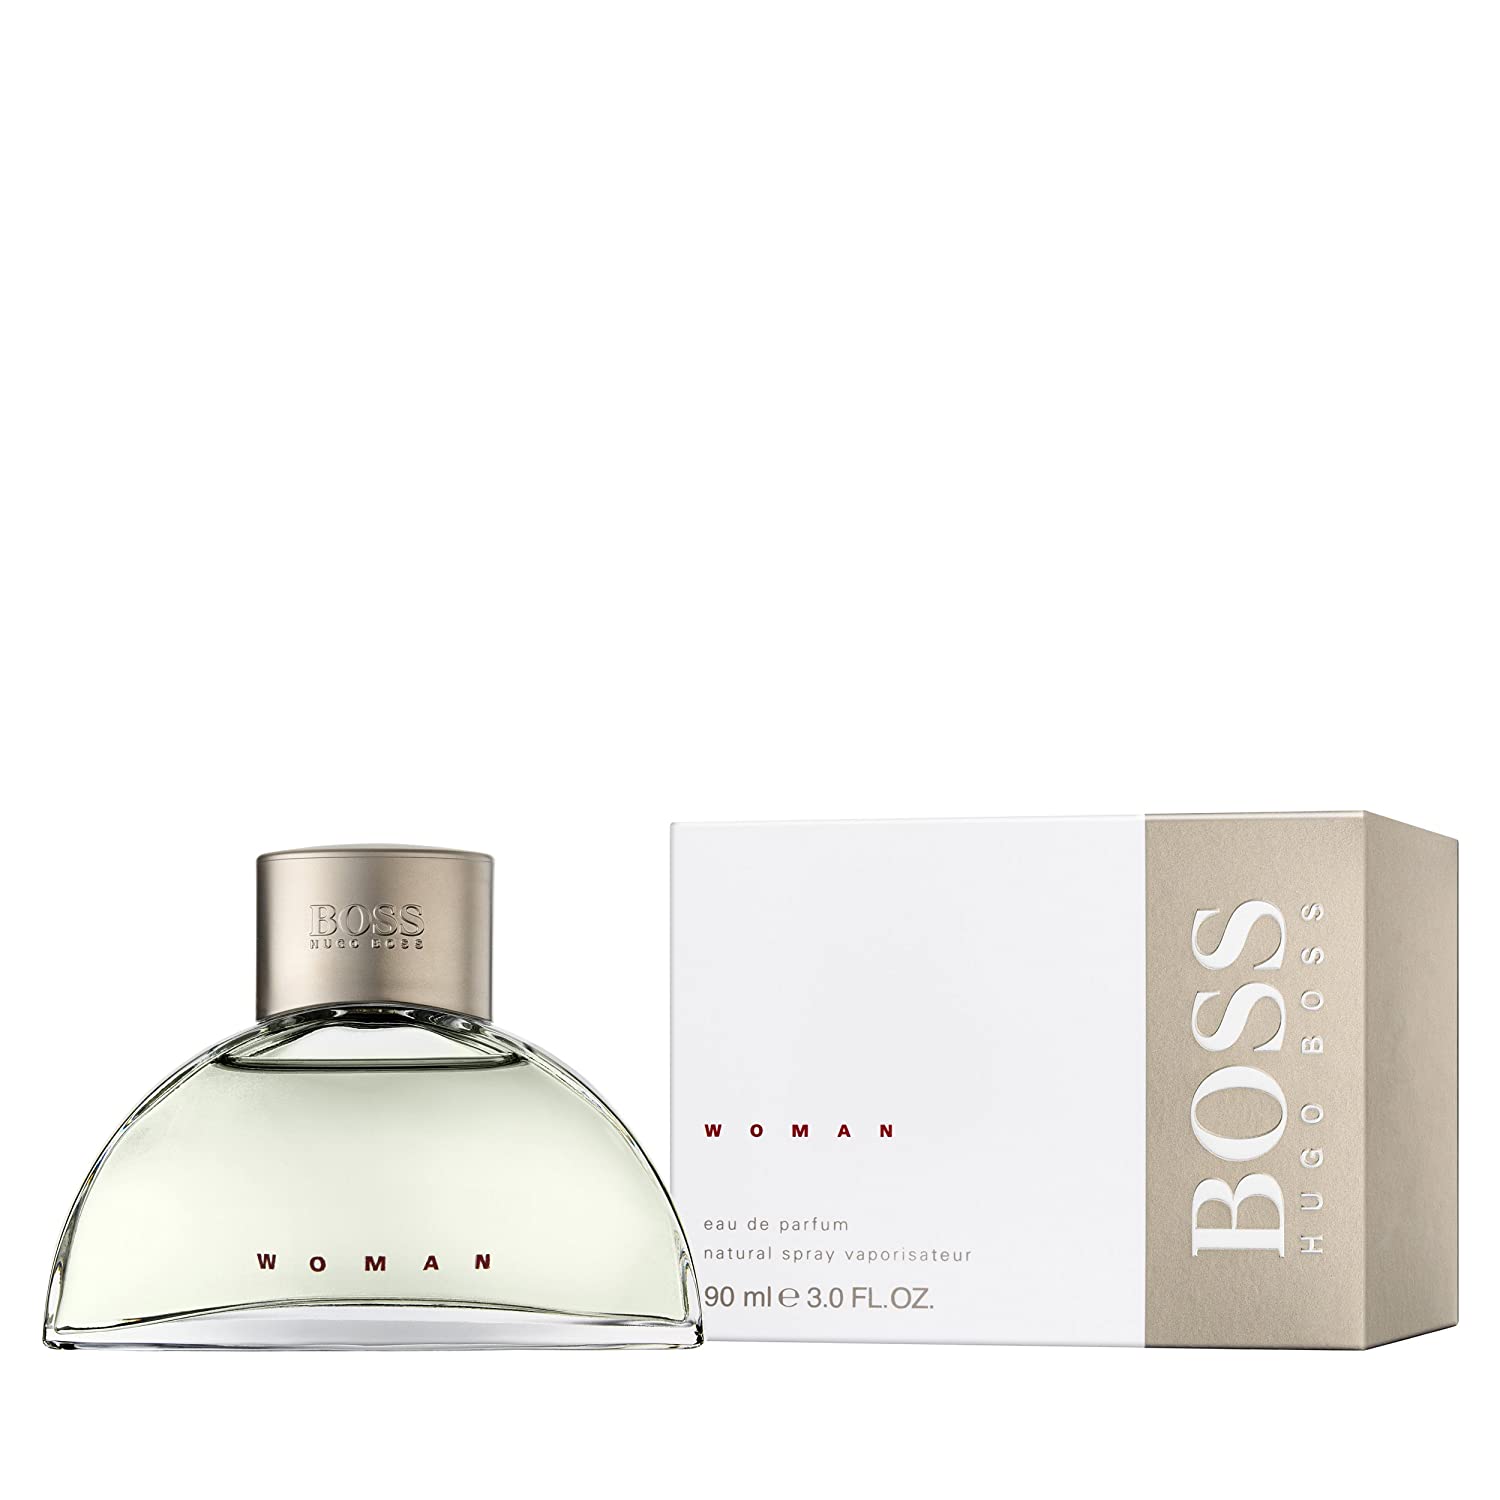 Hugo Boss Woman EDP - My Perfume Shop Australia